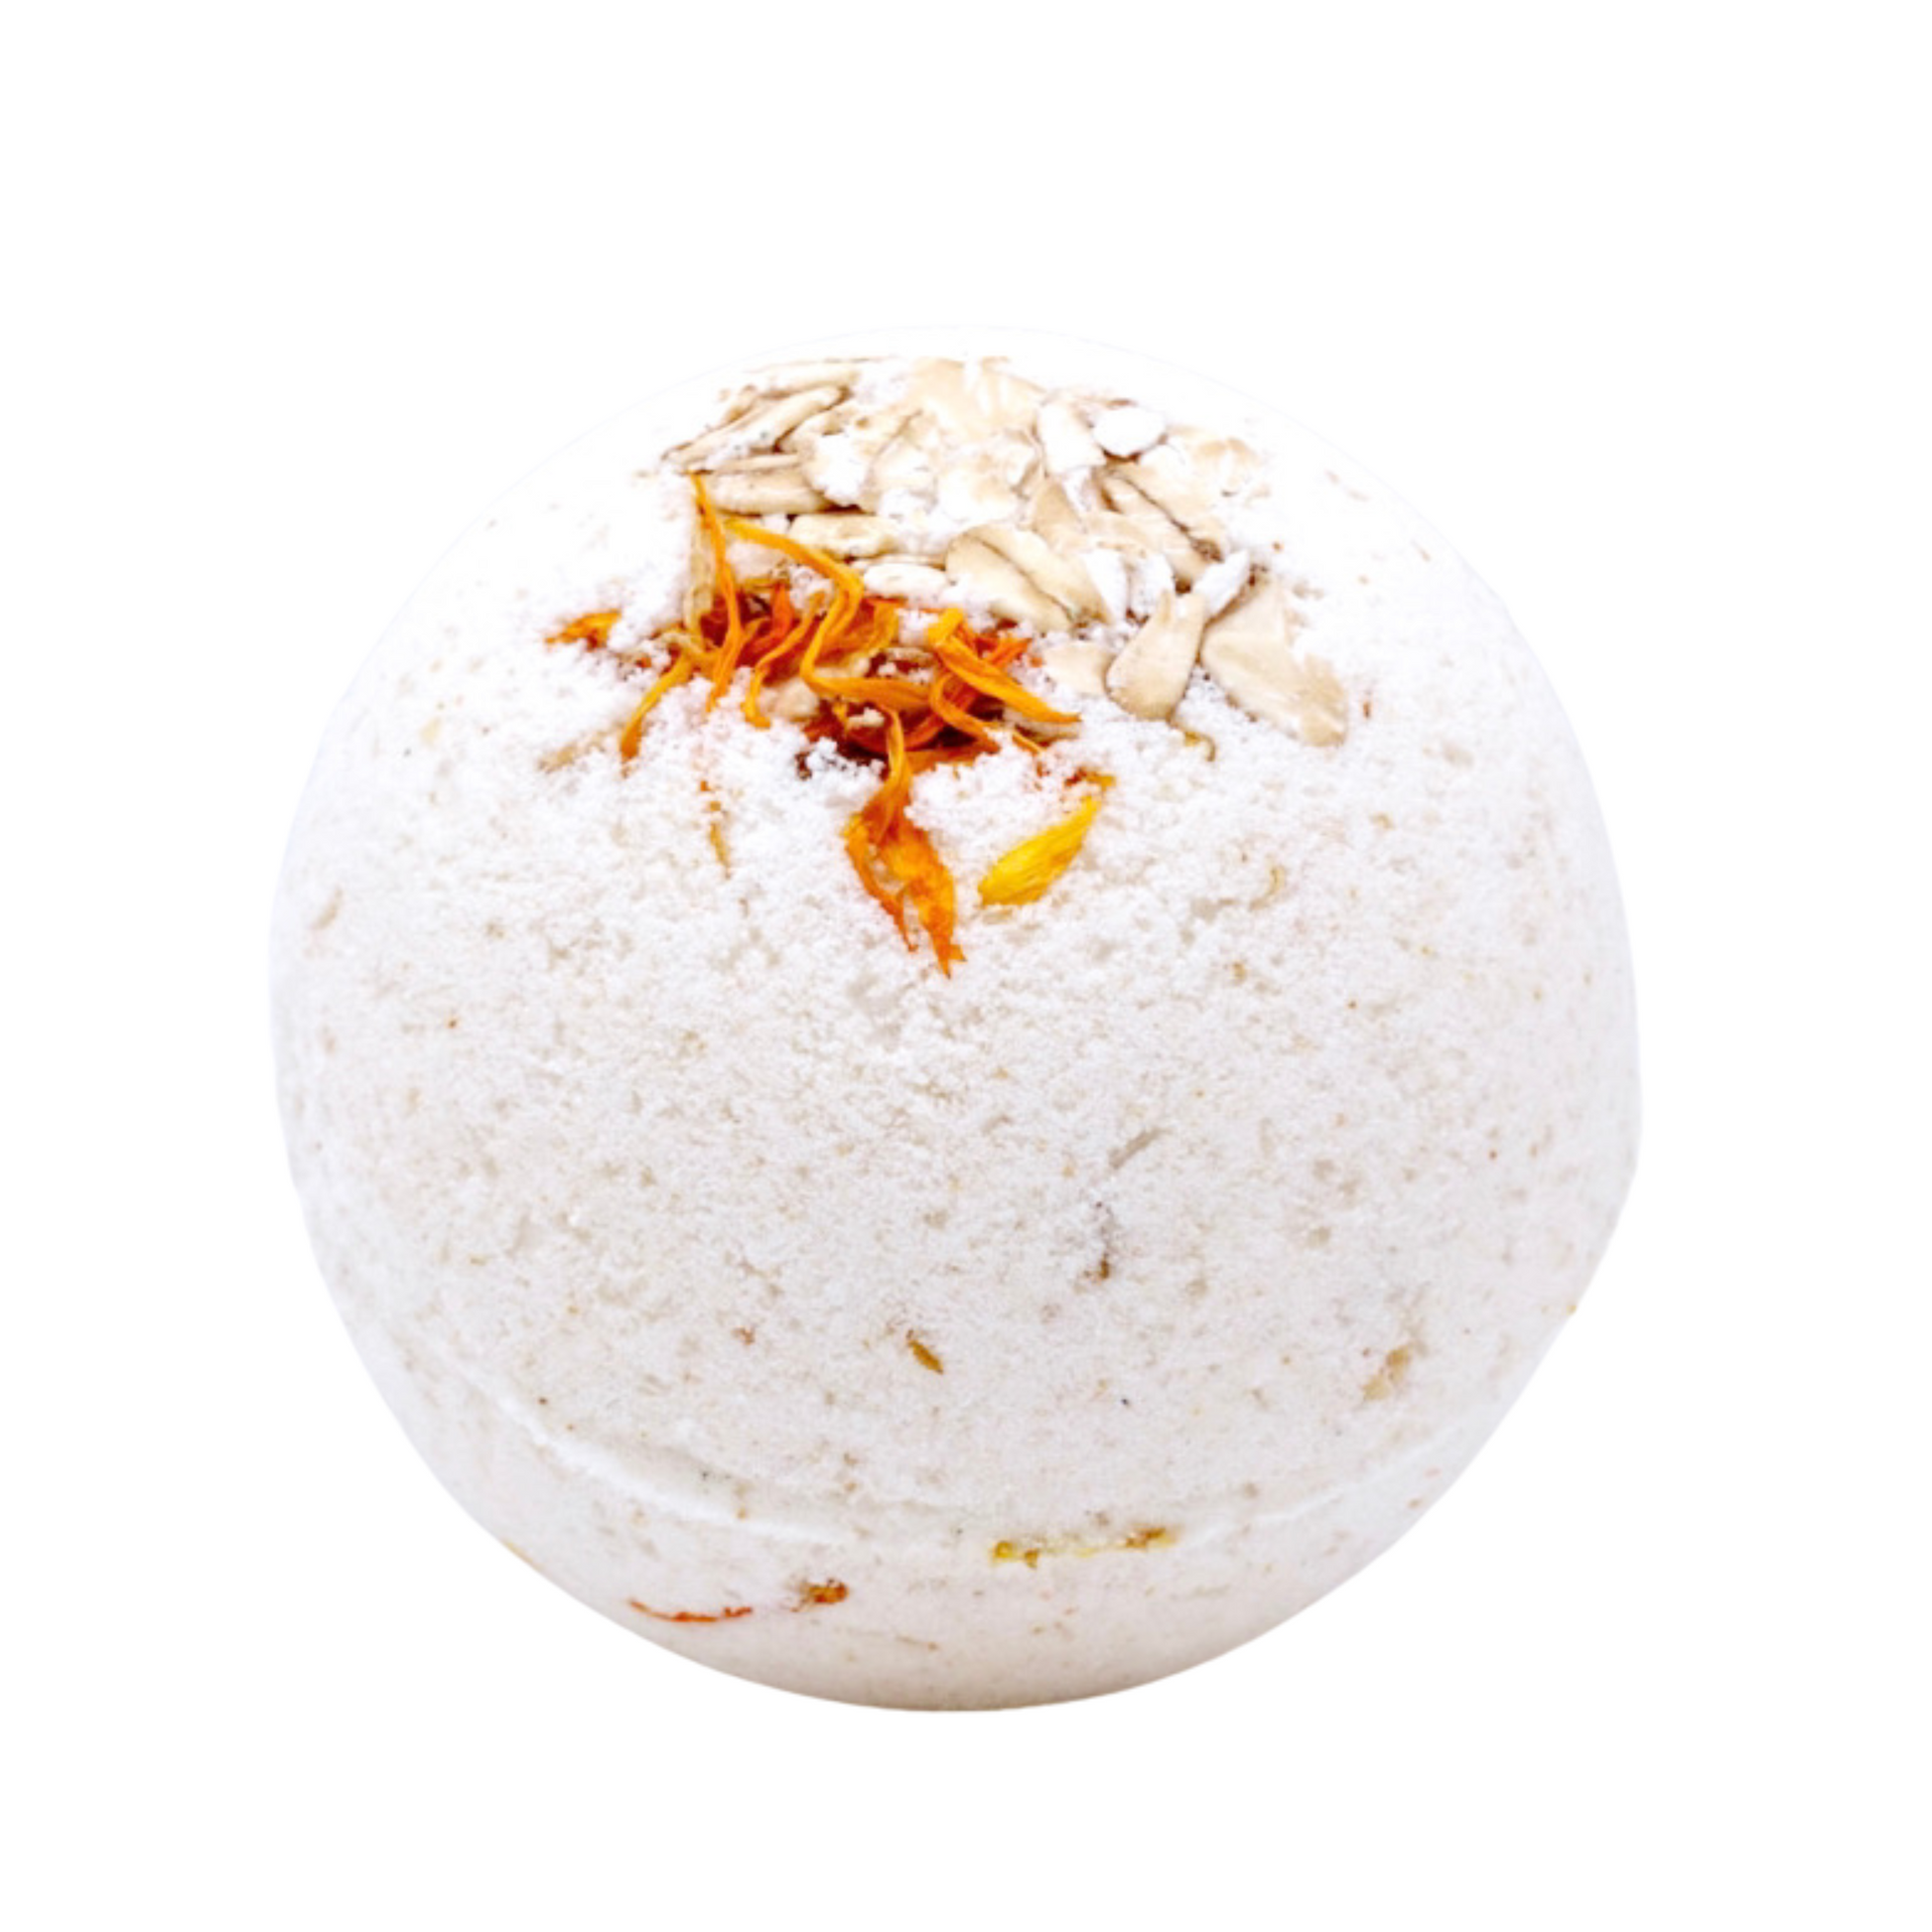 almond coconut rejuvenate bath bomb all natural handmade